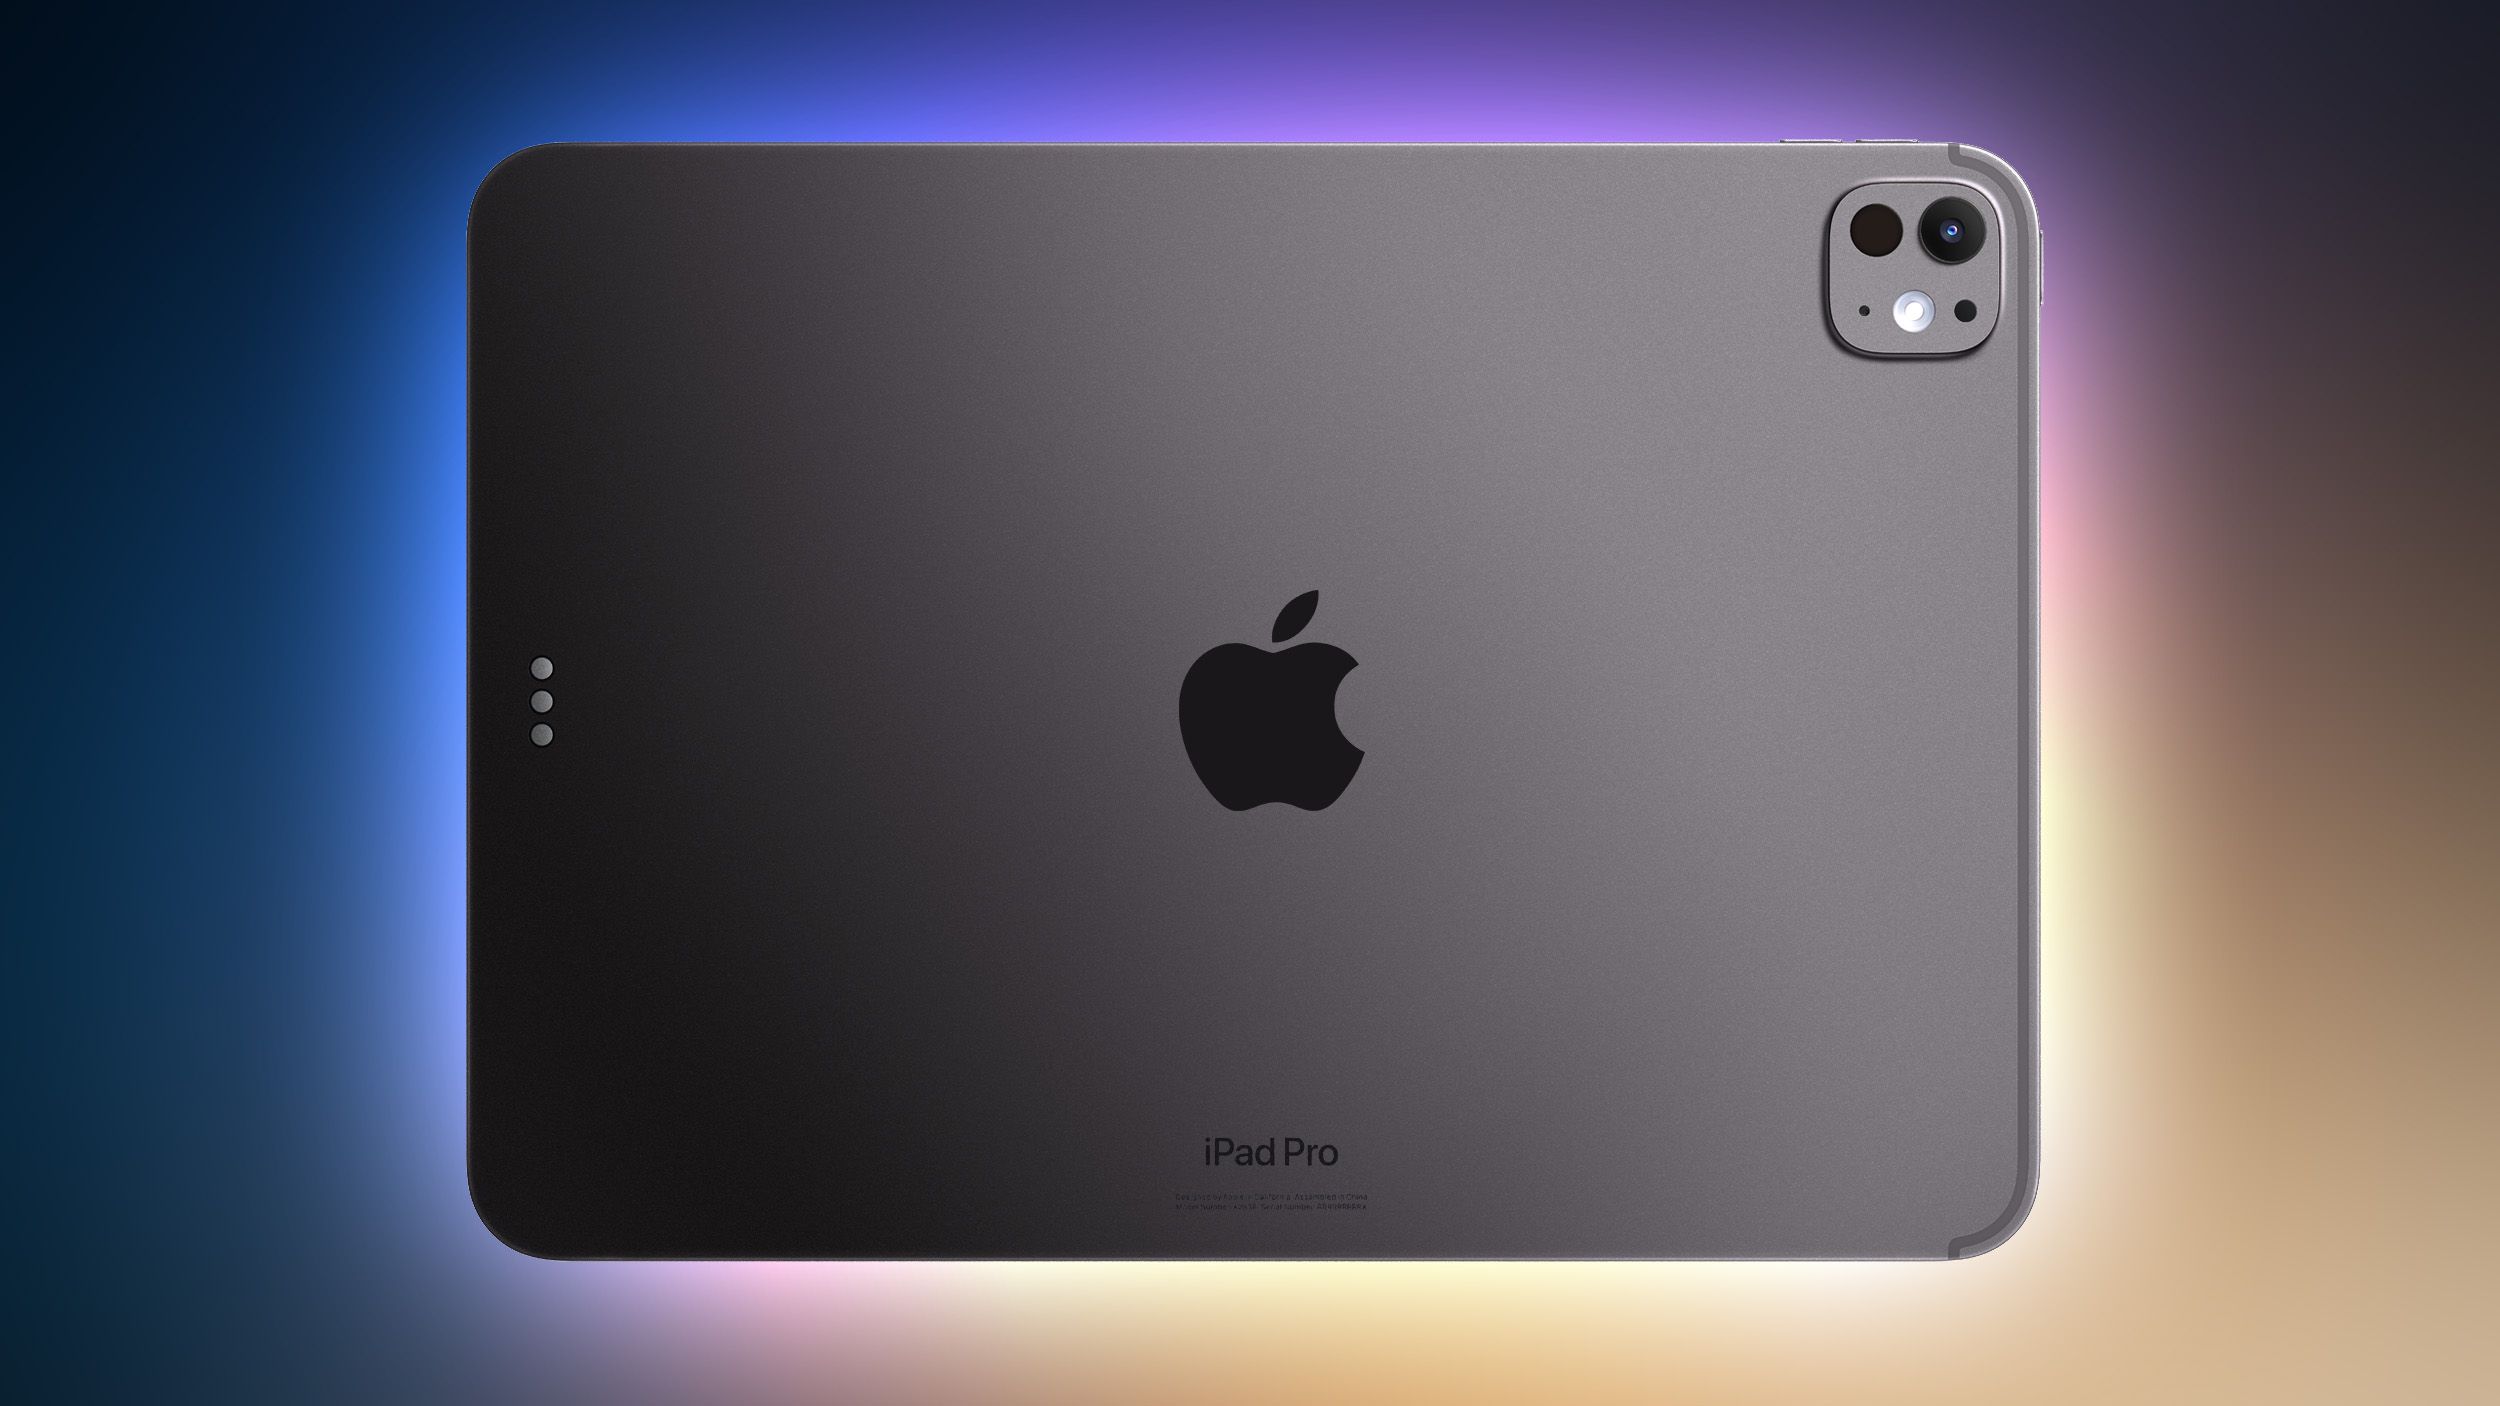 Apple Says Future iPads Could Feature Landscape Apple Logo - macrumors.com